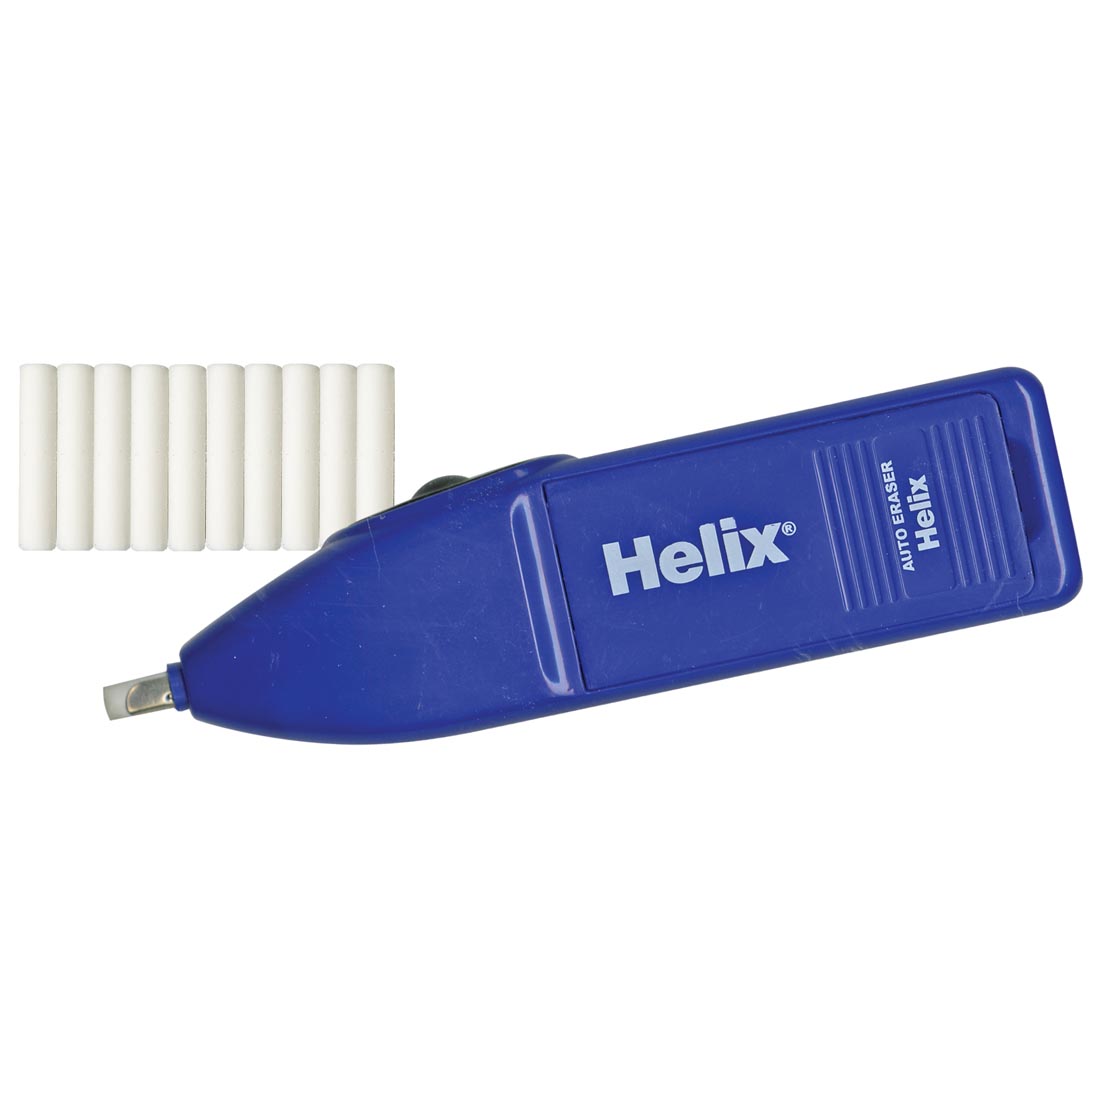 Helix Auto Eraser with 10 erasers